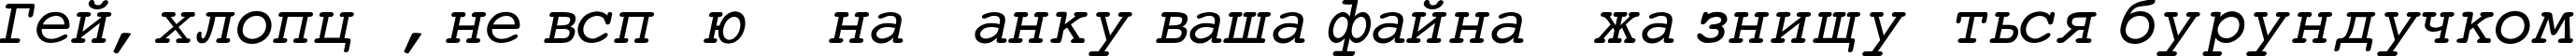 Пример написания шрифтом Courier-Normal-Italic текста на украинском